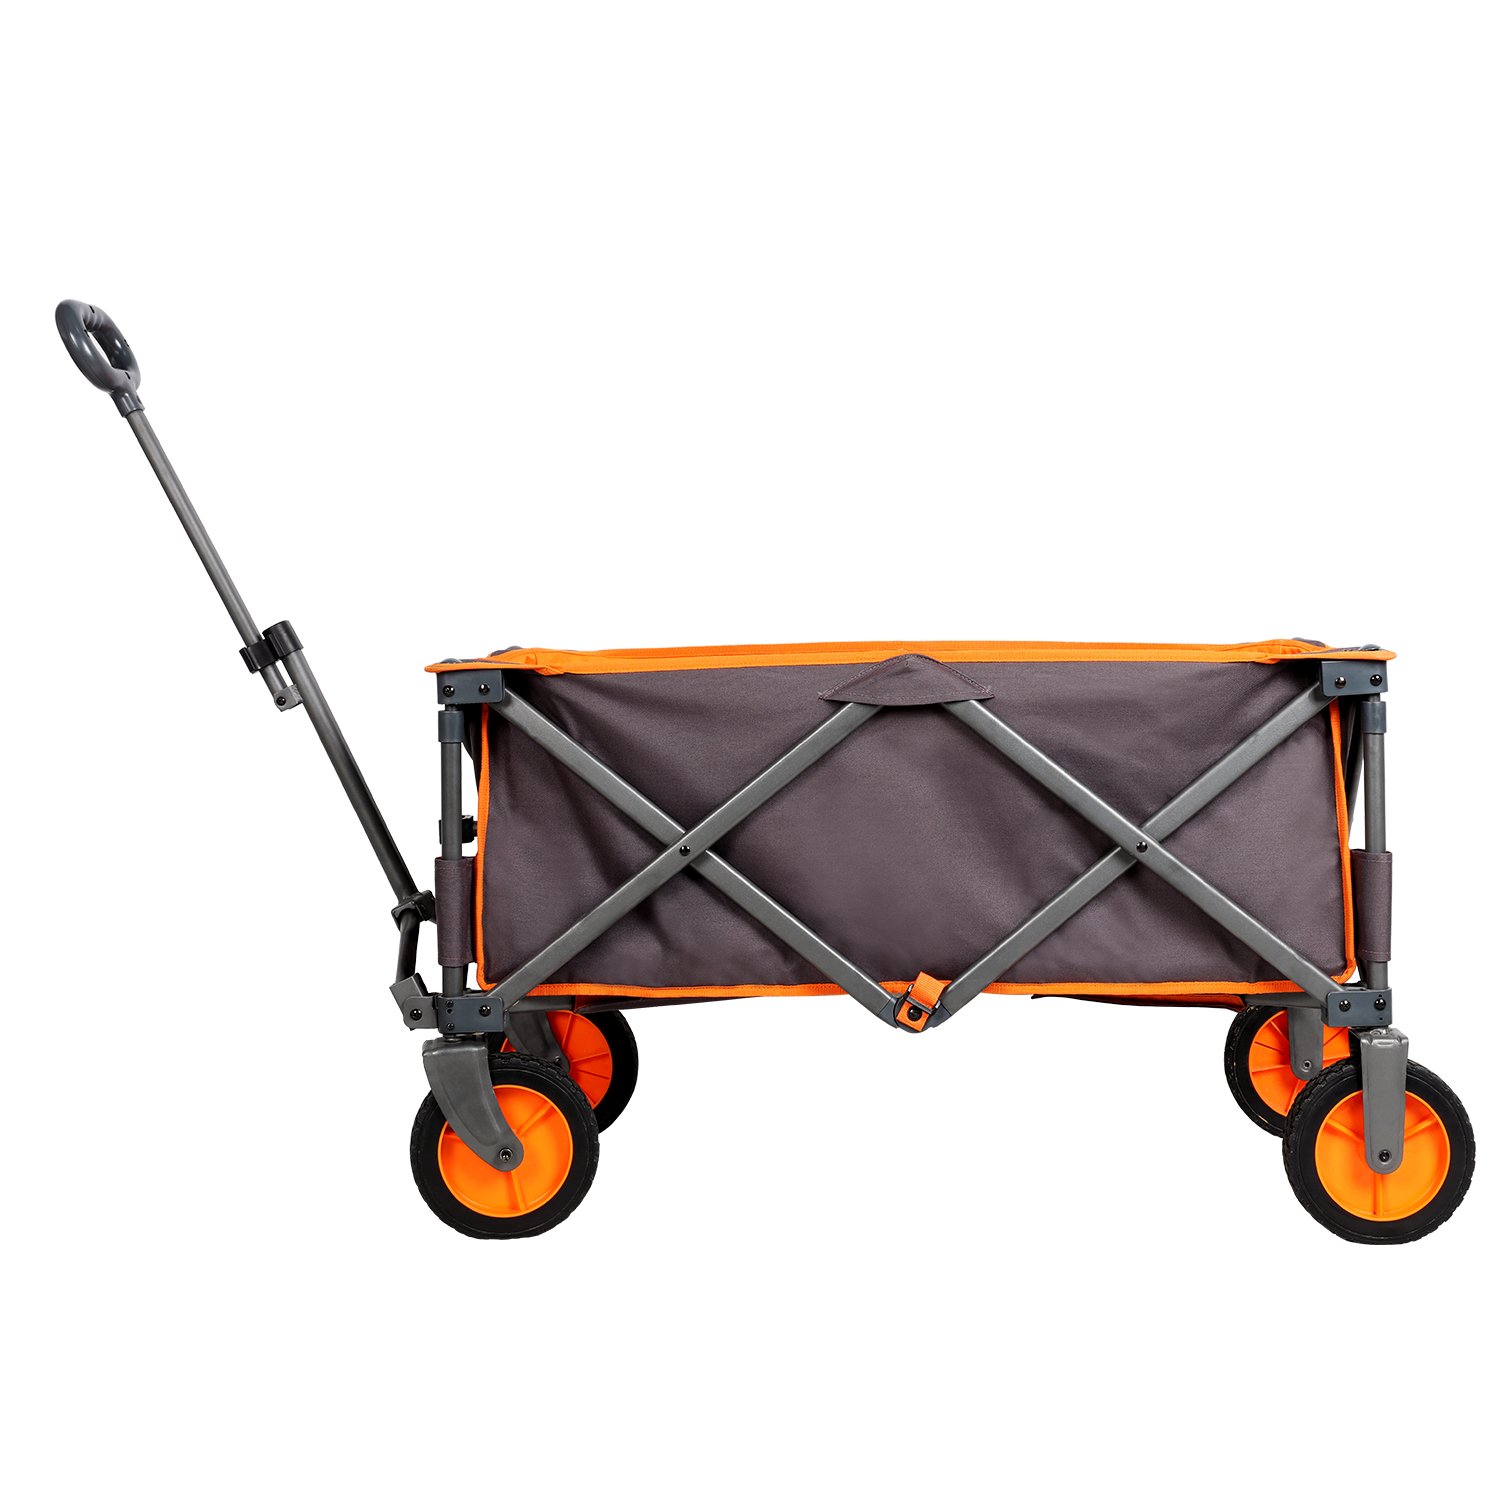 PORTAL Collapsible Folding Utility Wagon Quad Compact Outdoor Garden Camping Cart